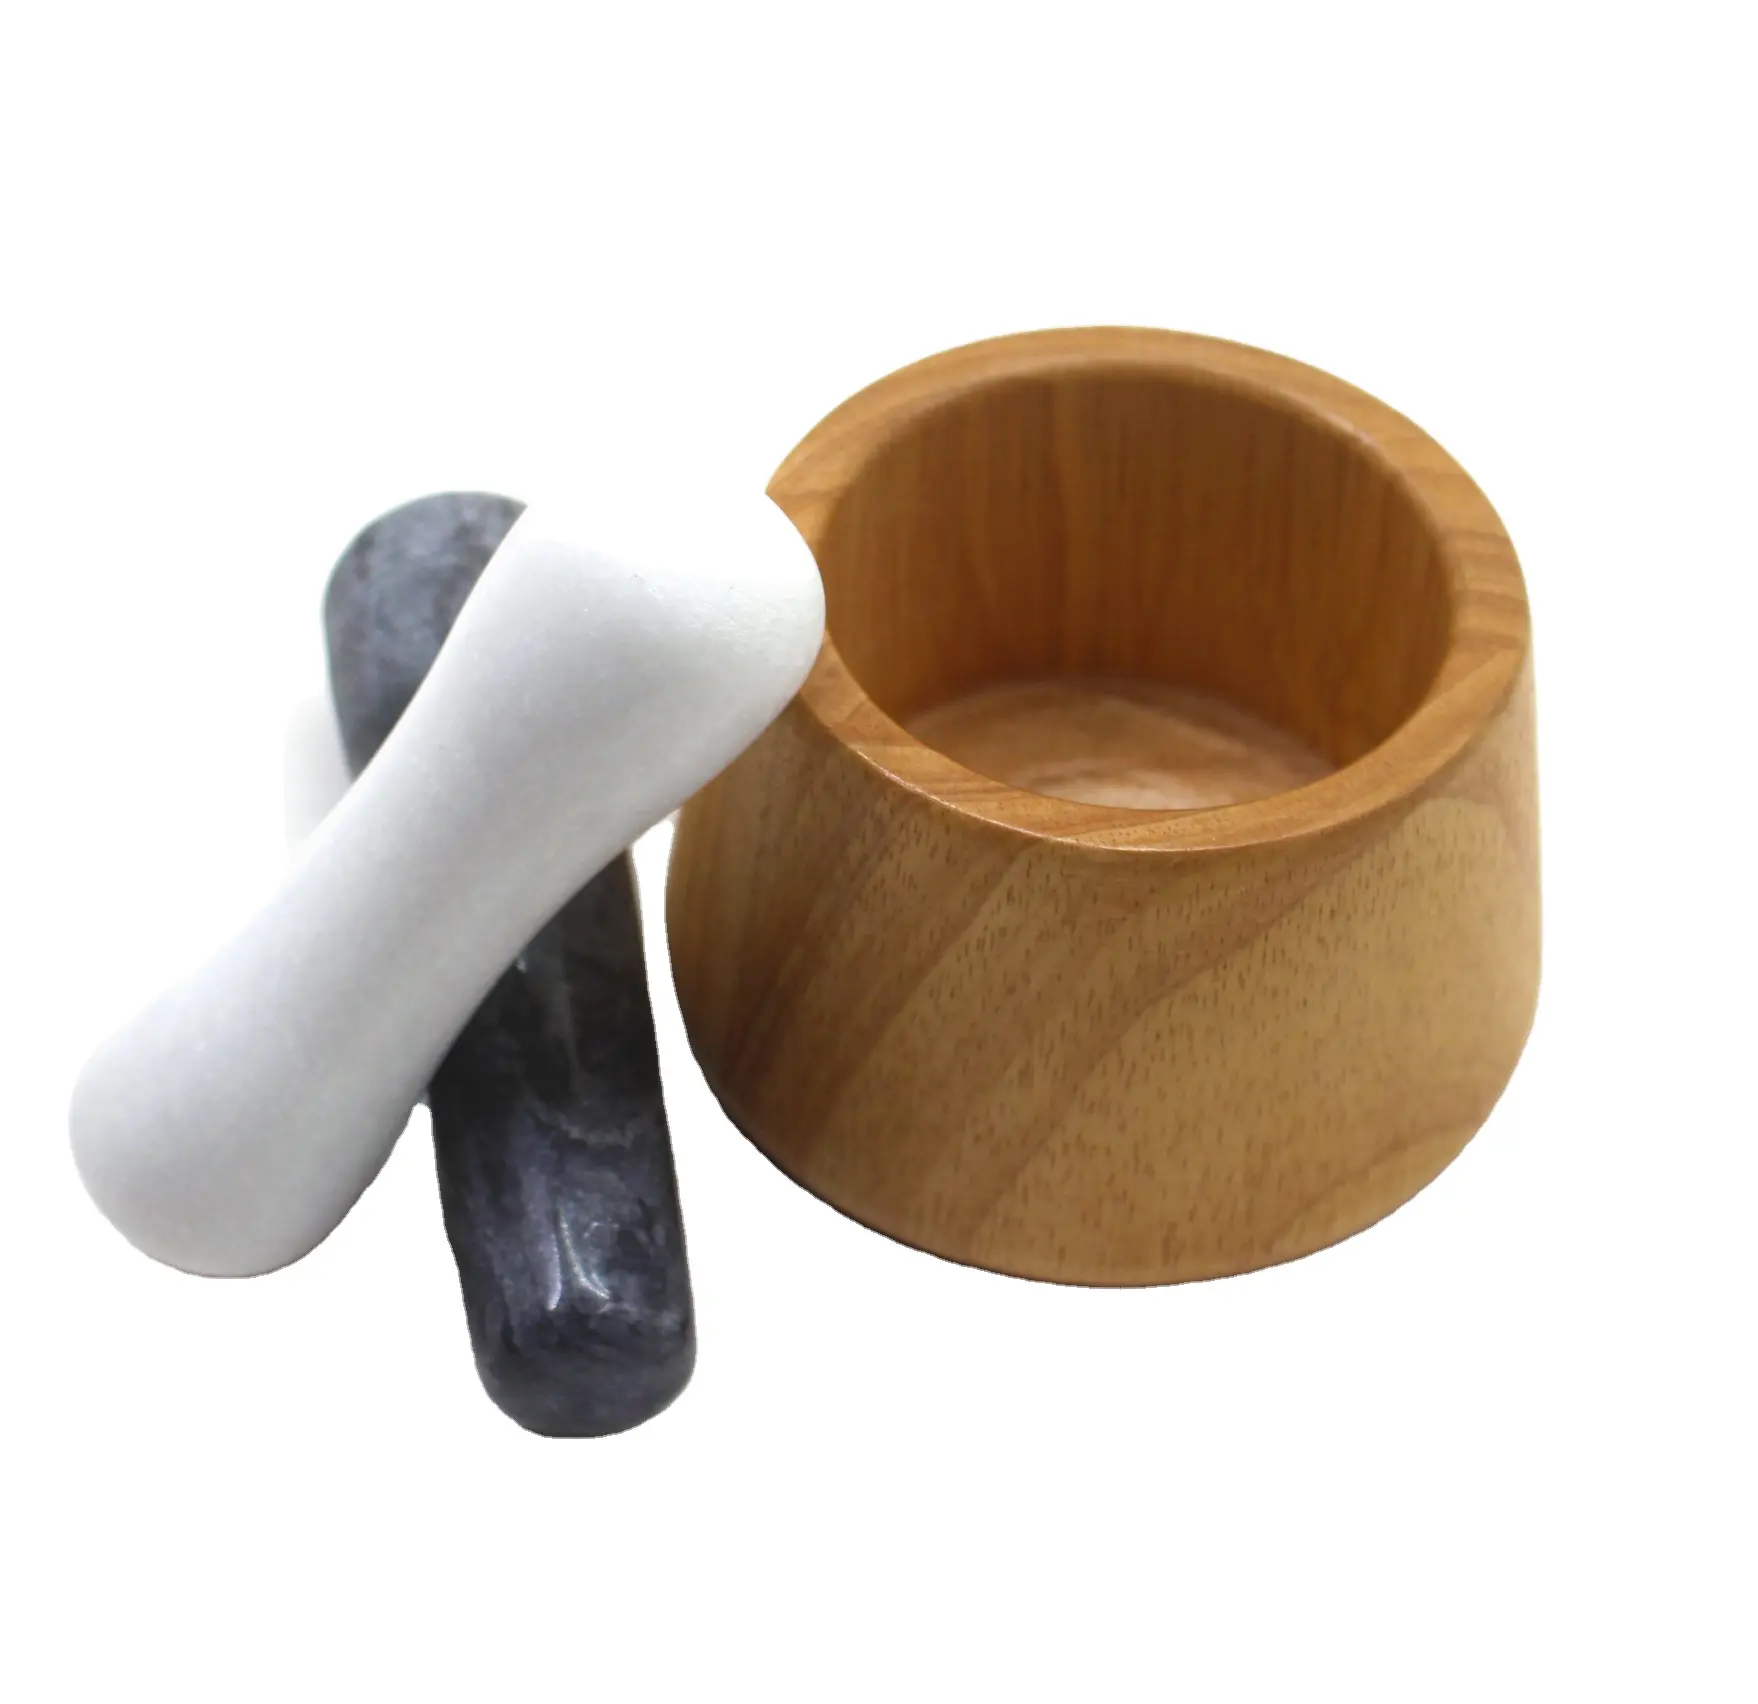 Homsense amazon product customized design wooden mortal and pestle garlic press set Press garlic